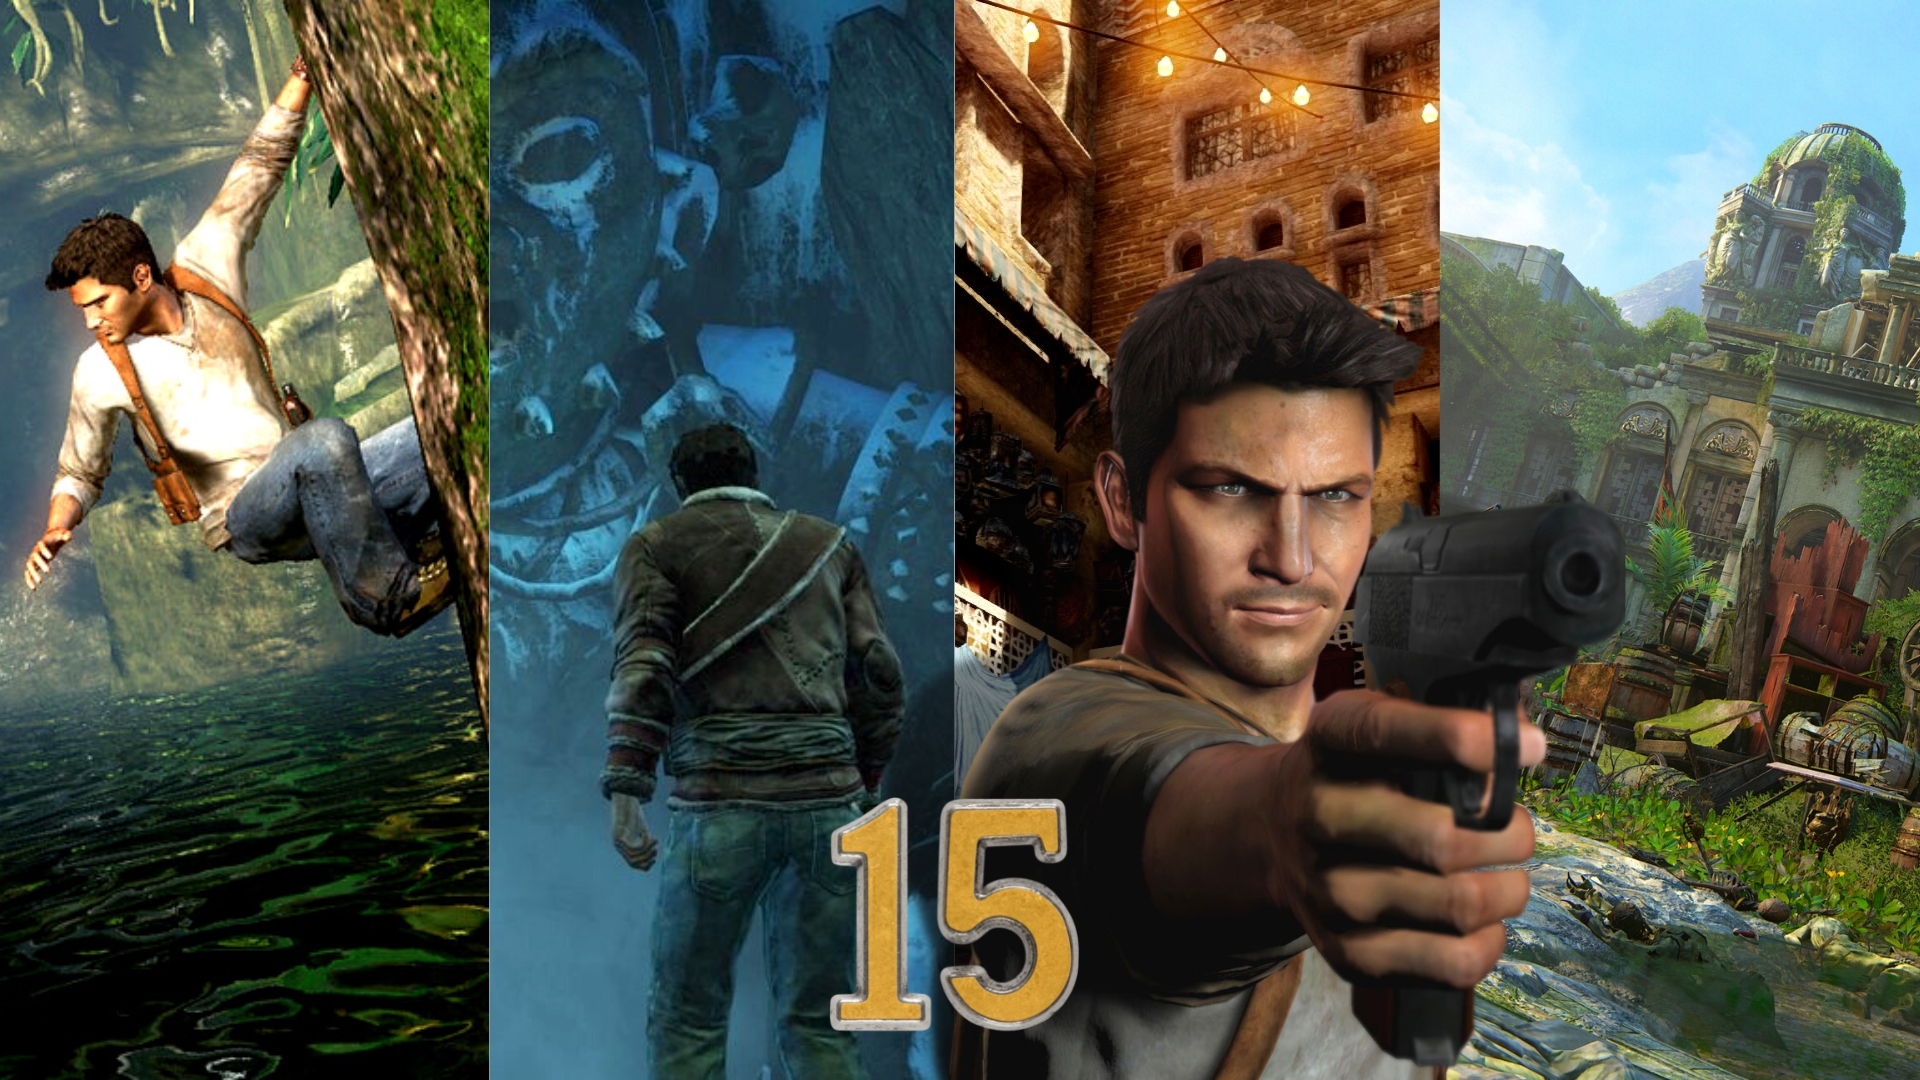 Uncharted 4': A Close Look At The New Nathan Drake Design